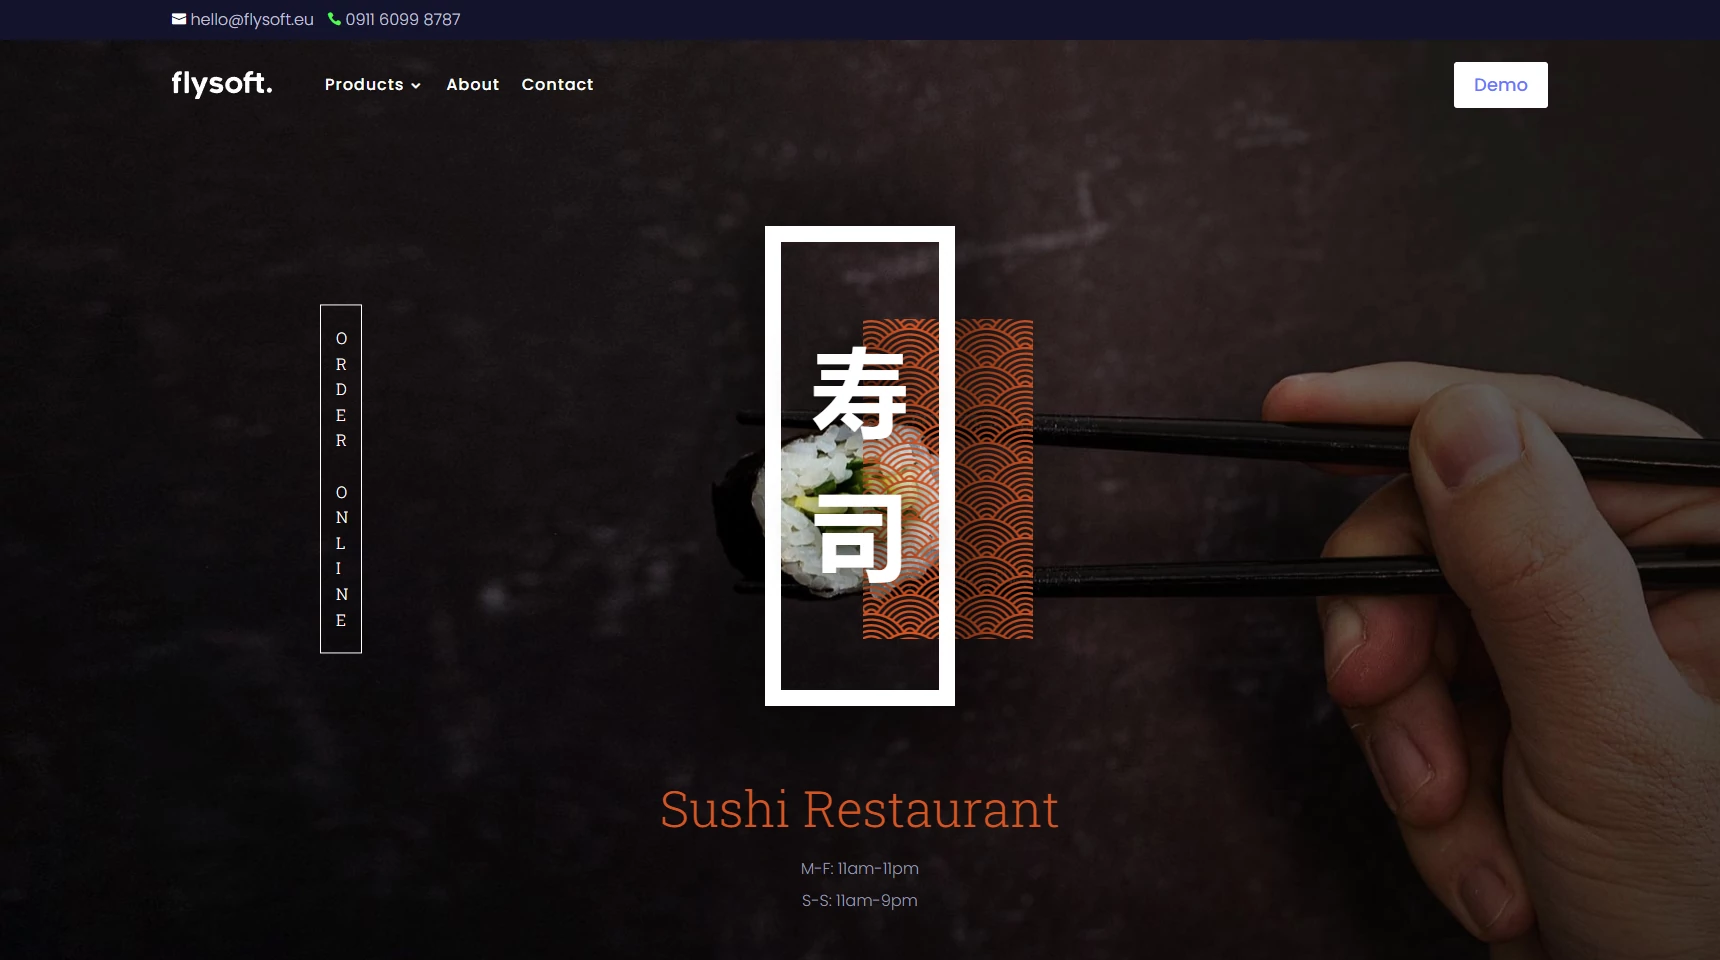 Samsung tablet device showing custom restaurant website on screen.